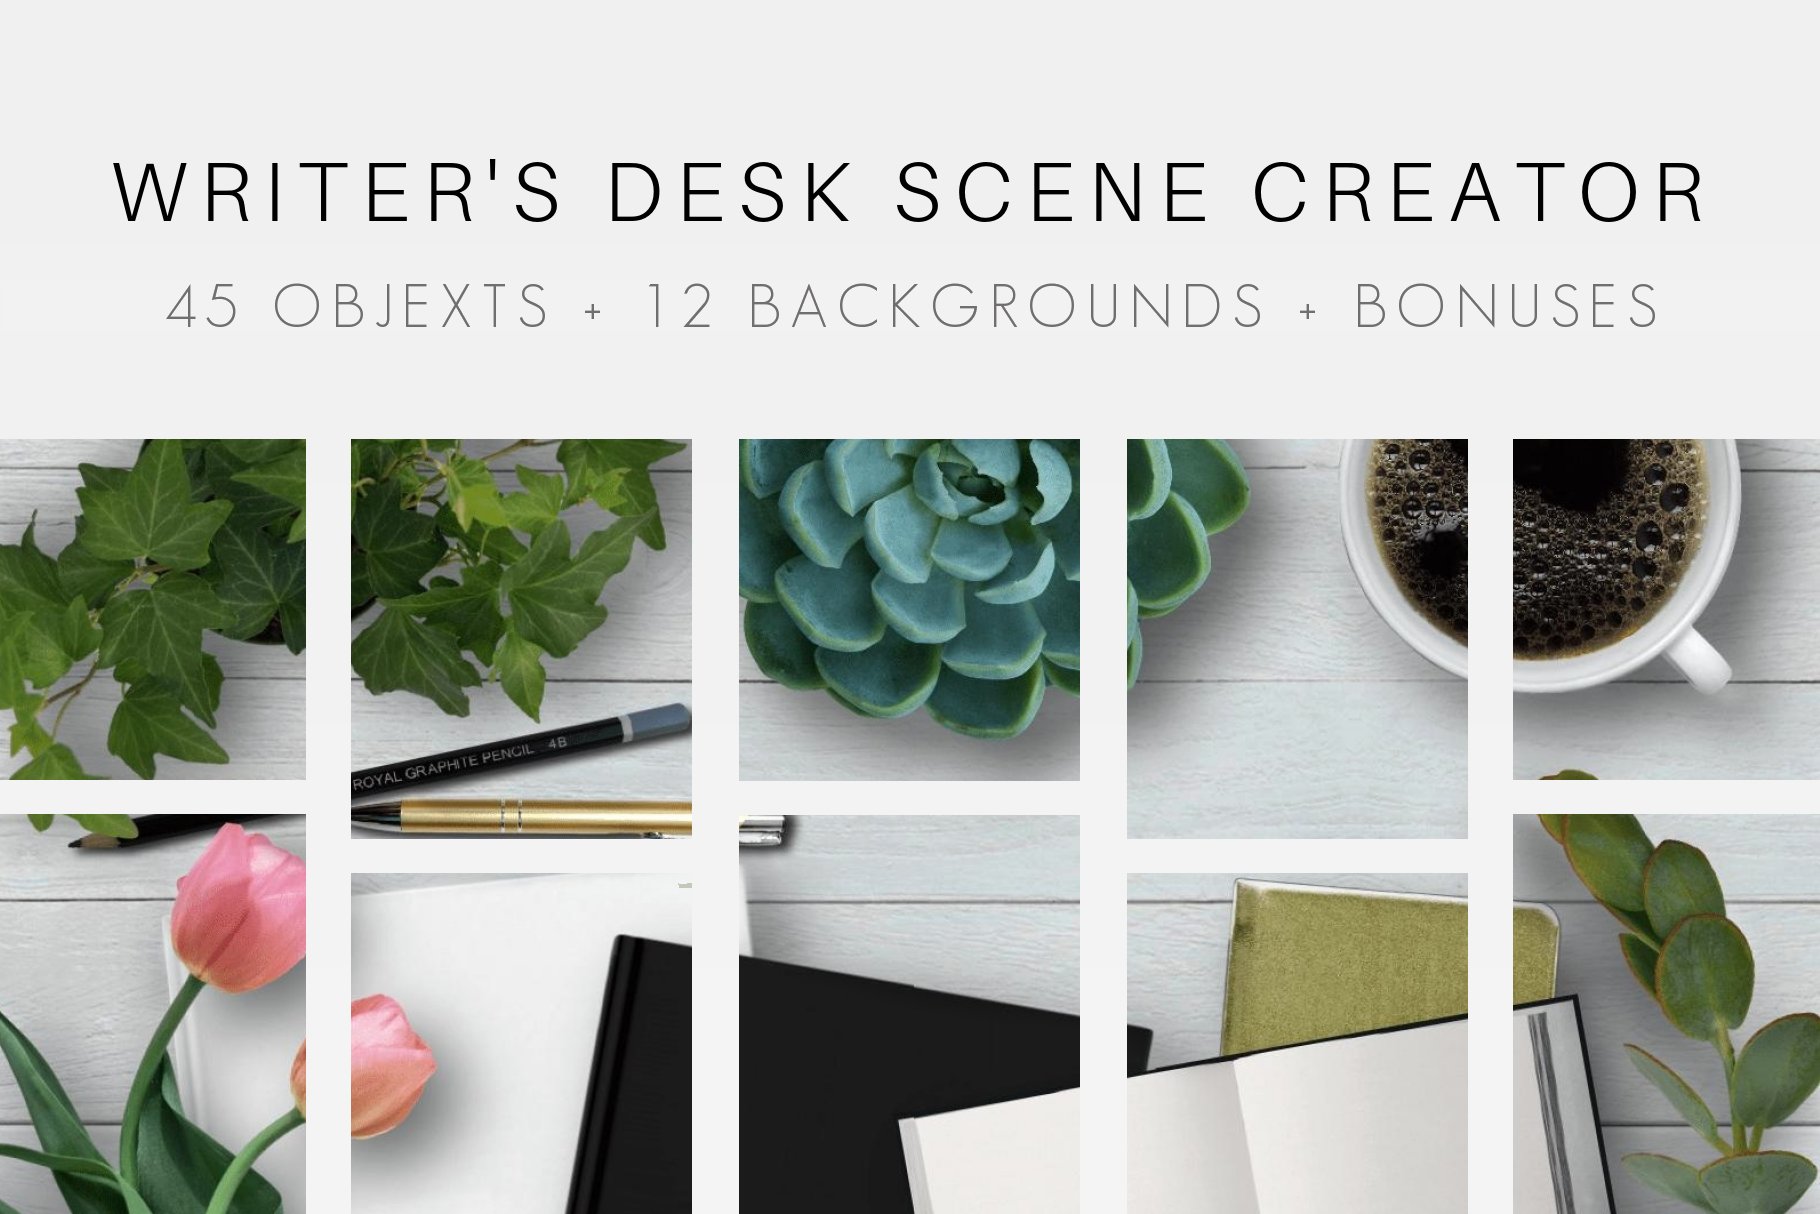 Writer's Desk Scene Creator cover image.